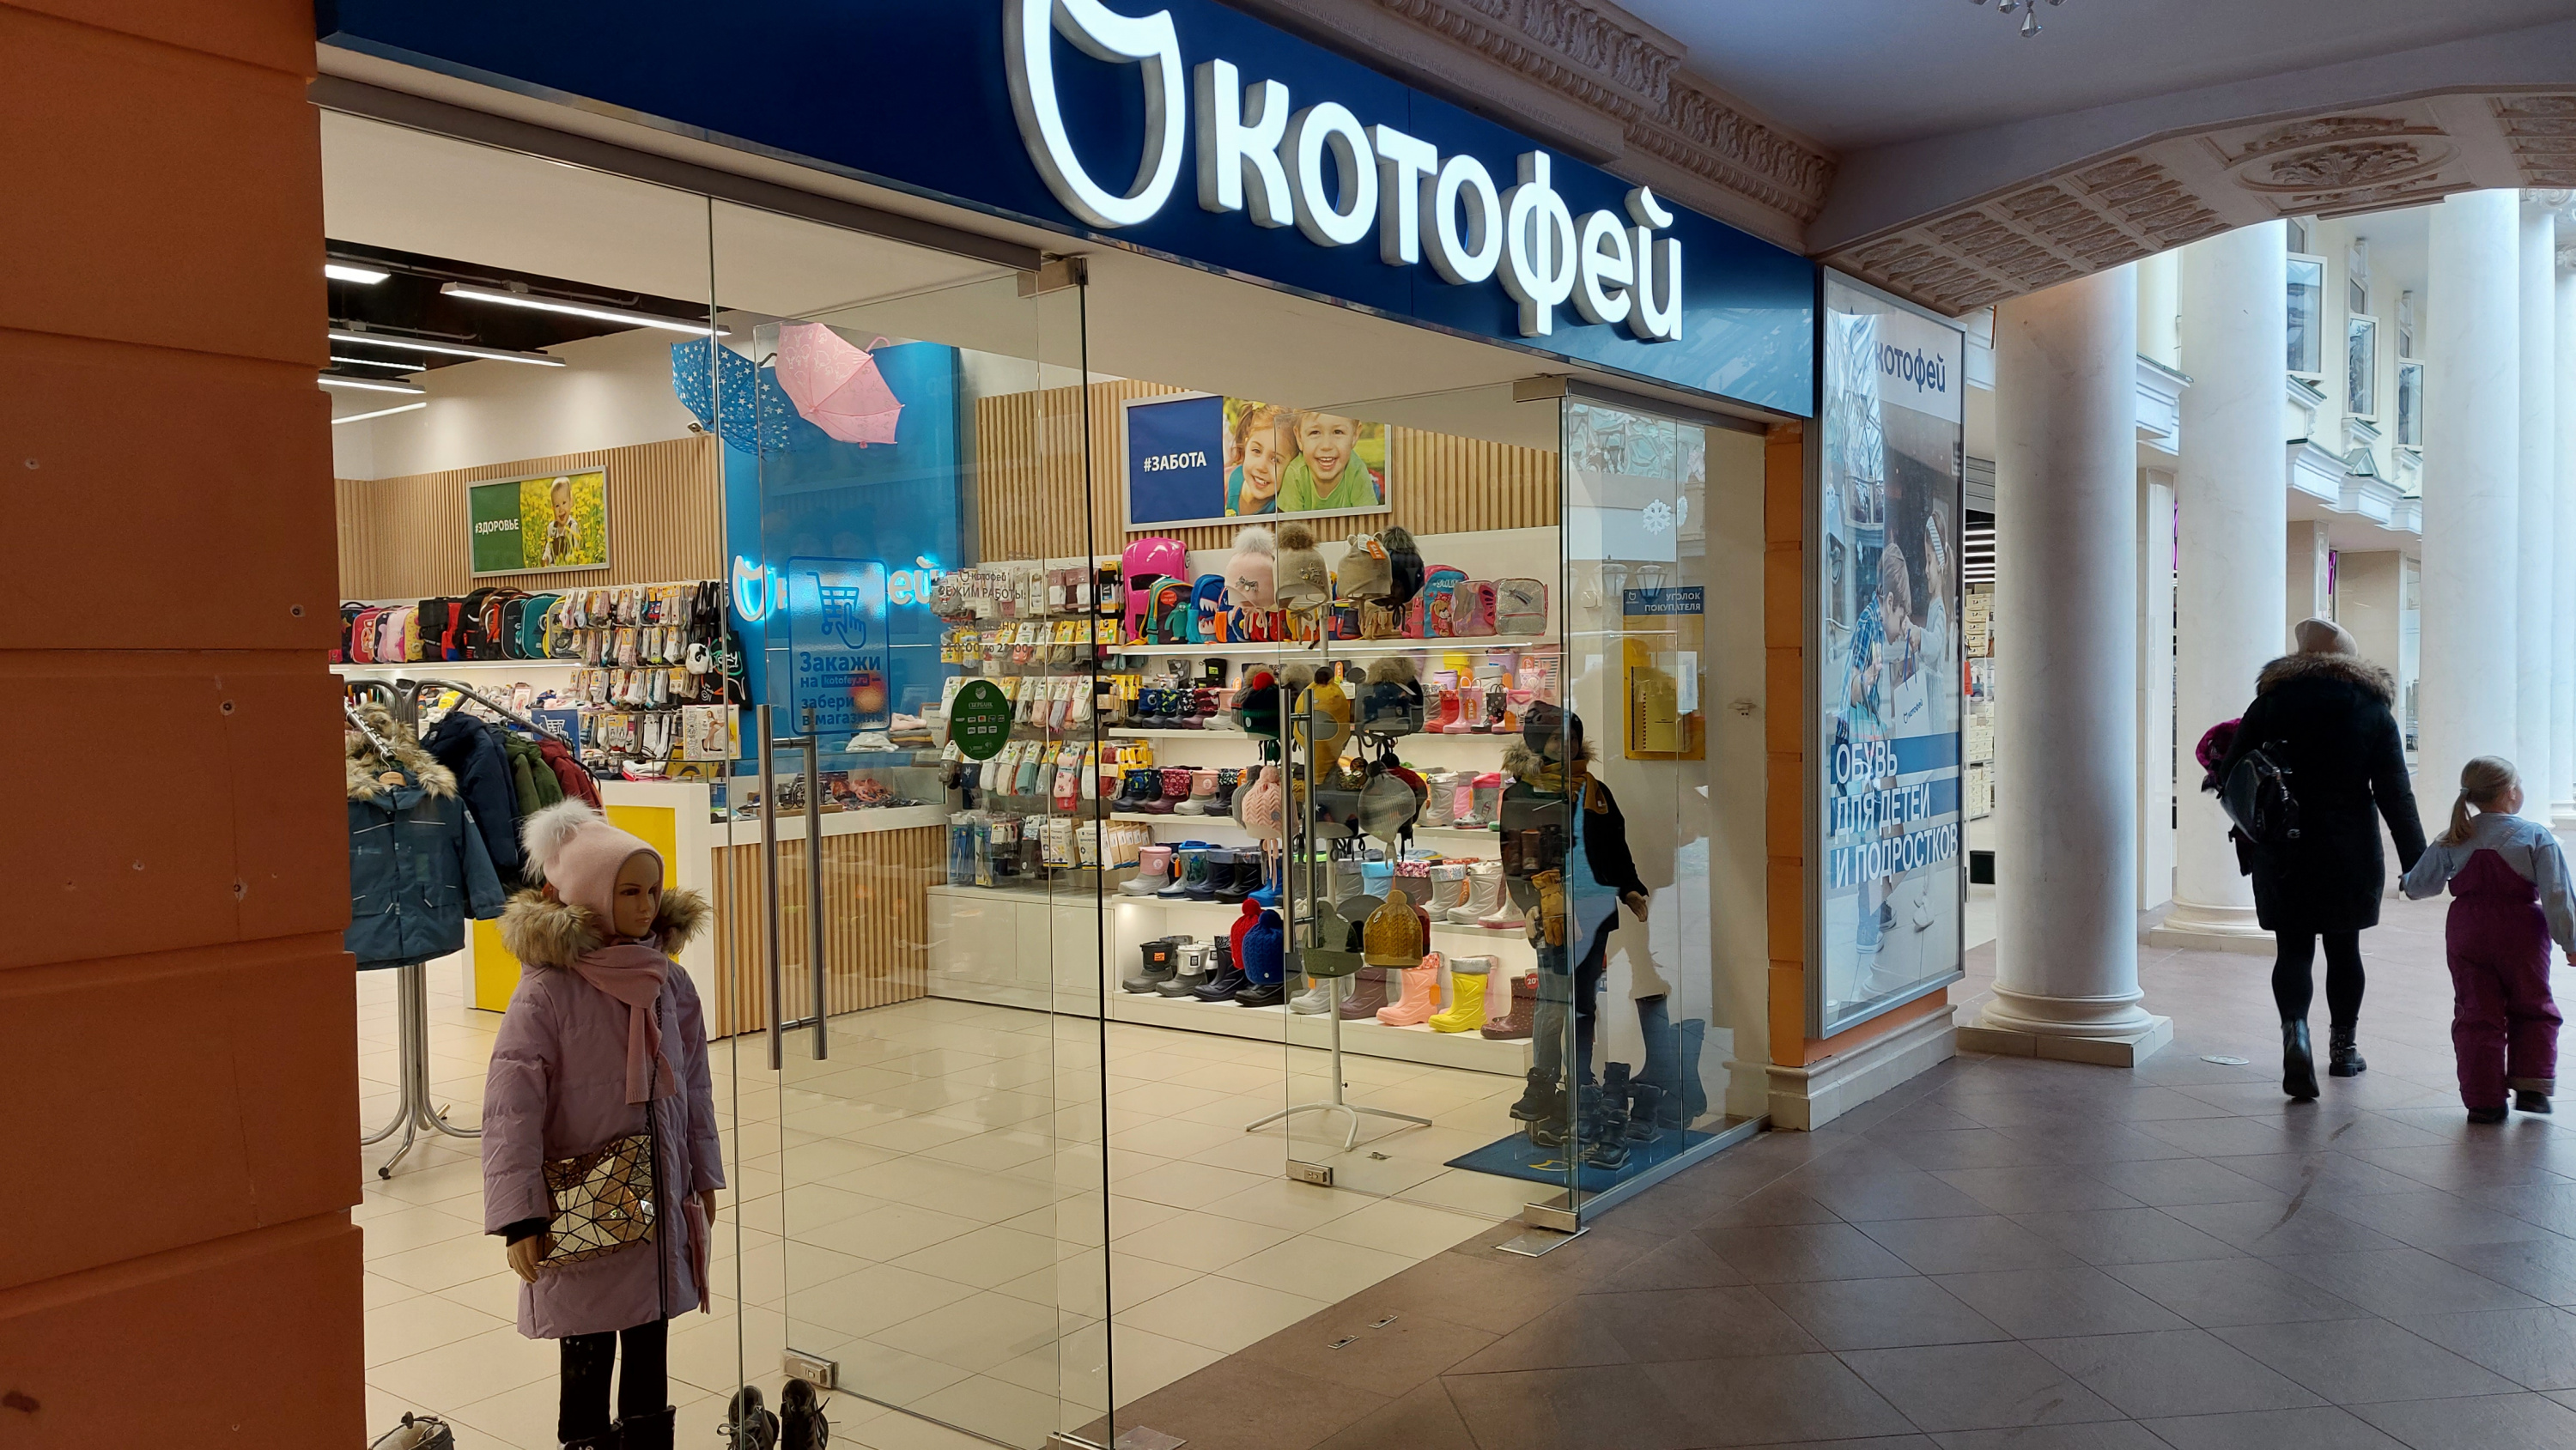 Фото: Агеенкова А/Retail.ru